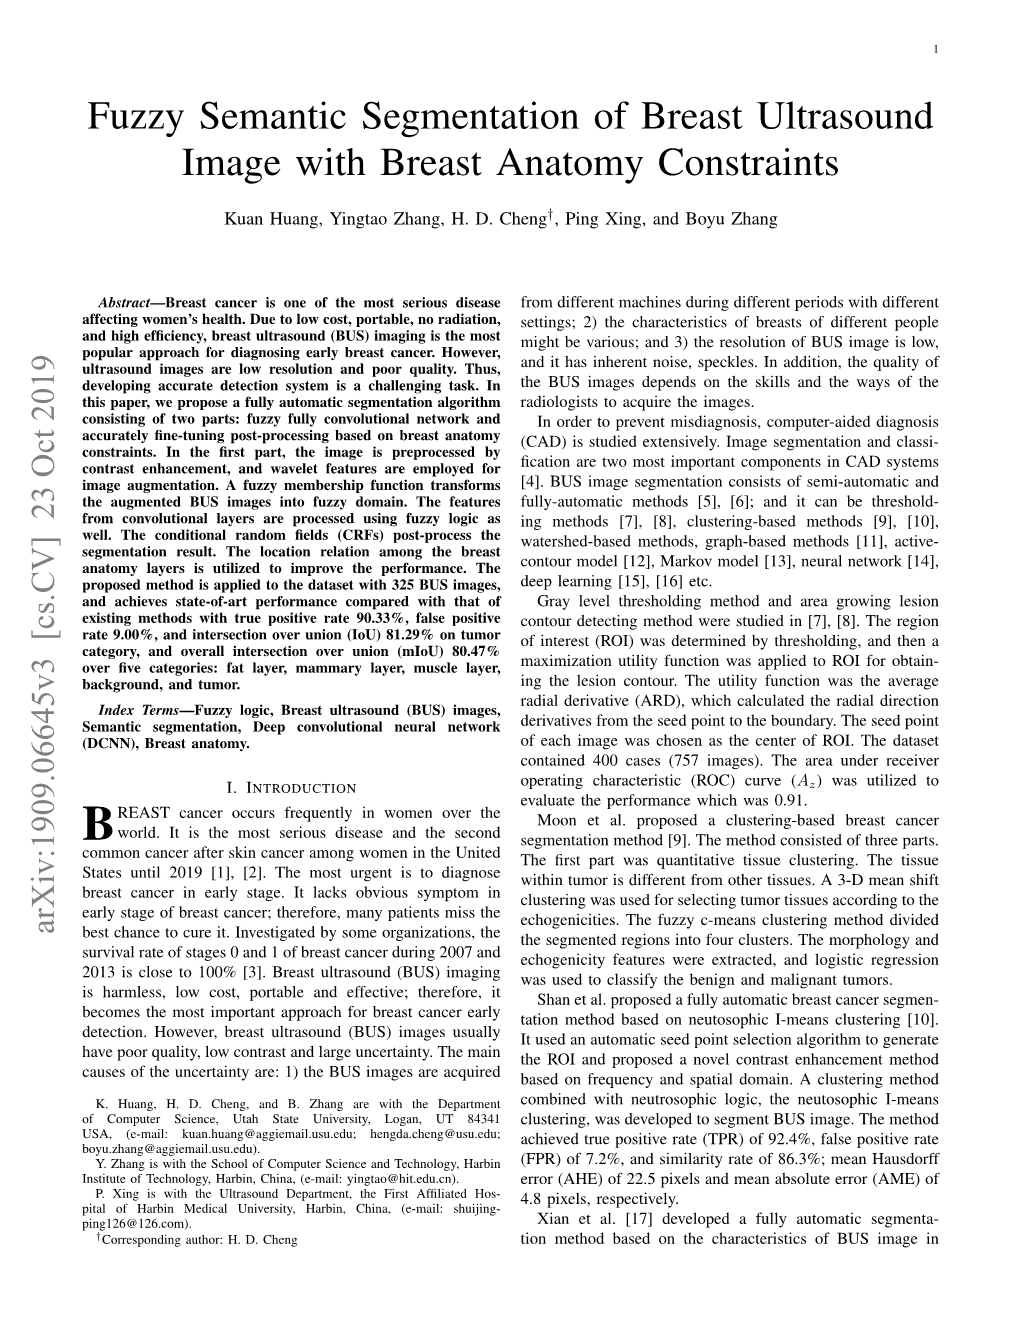 Fuzzy Semantic Segmentation of Breast Ultrasound Image with Breast Anatomy Constraints